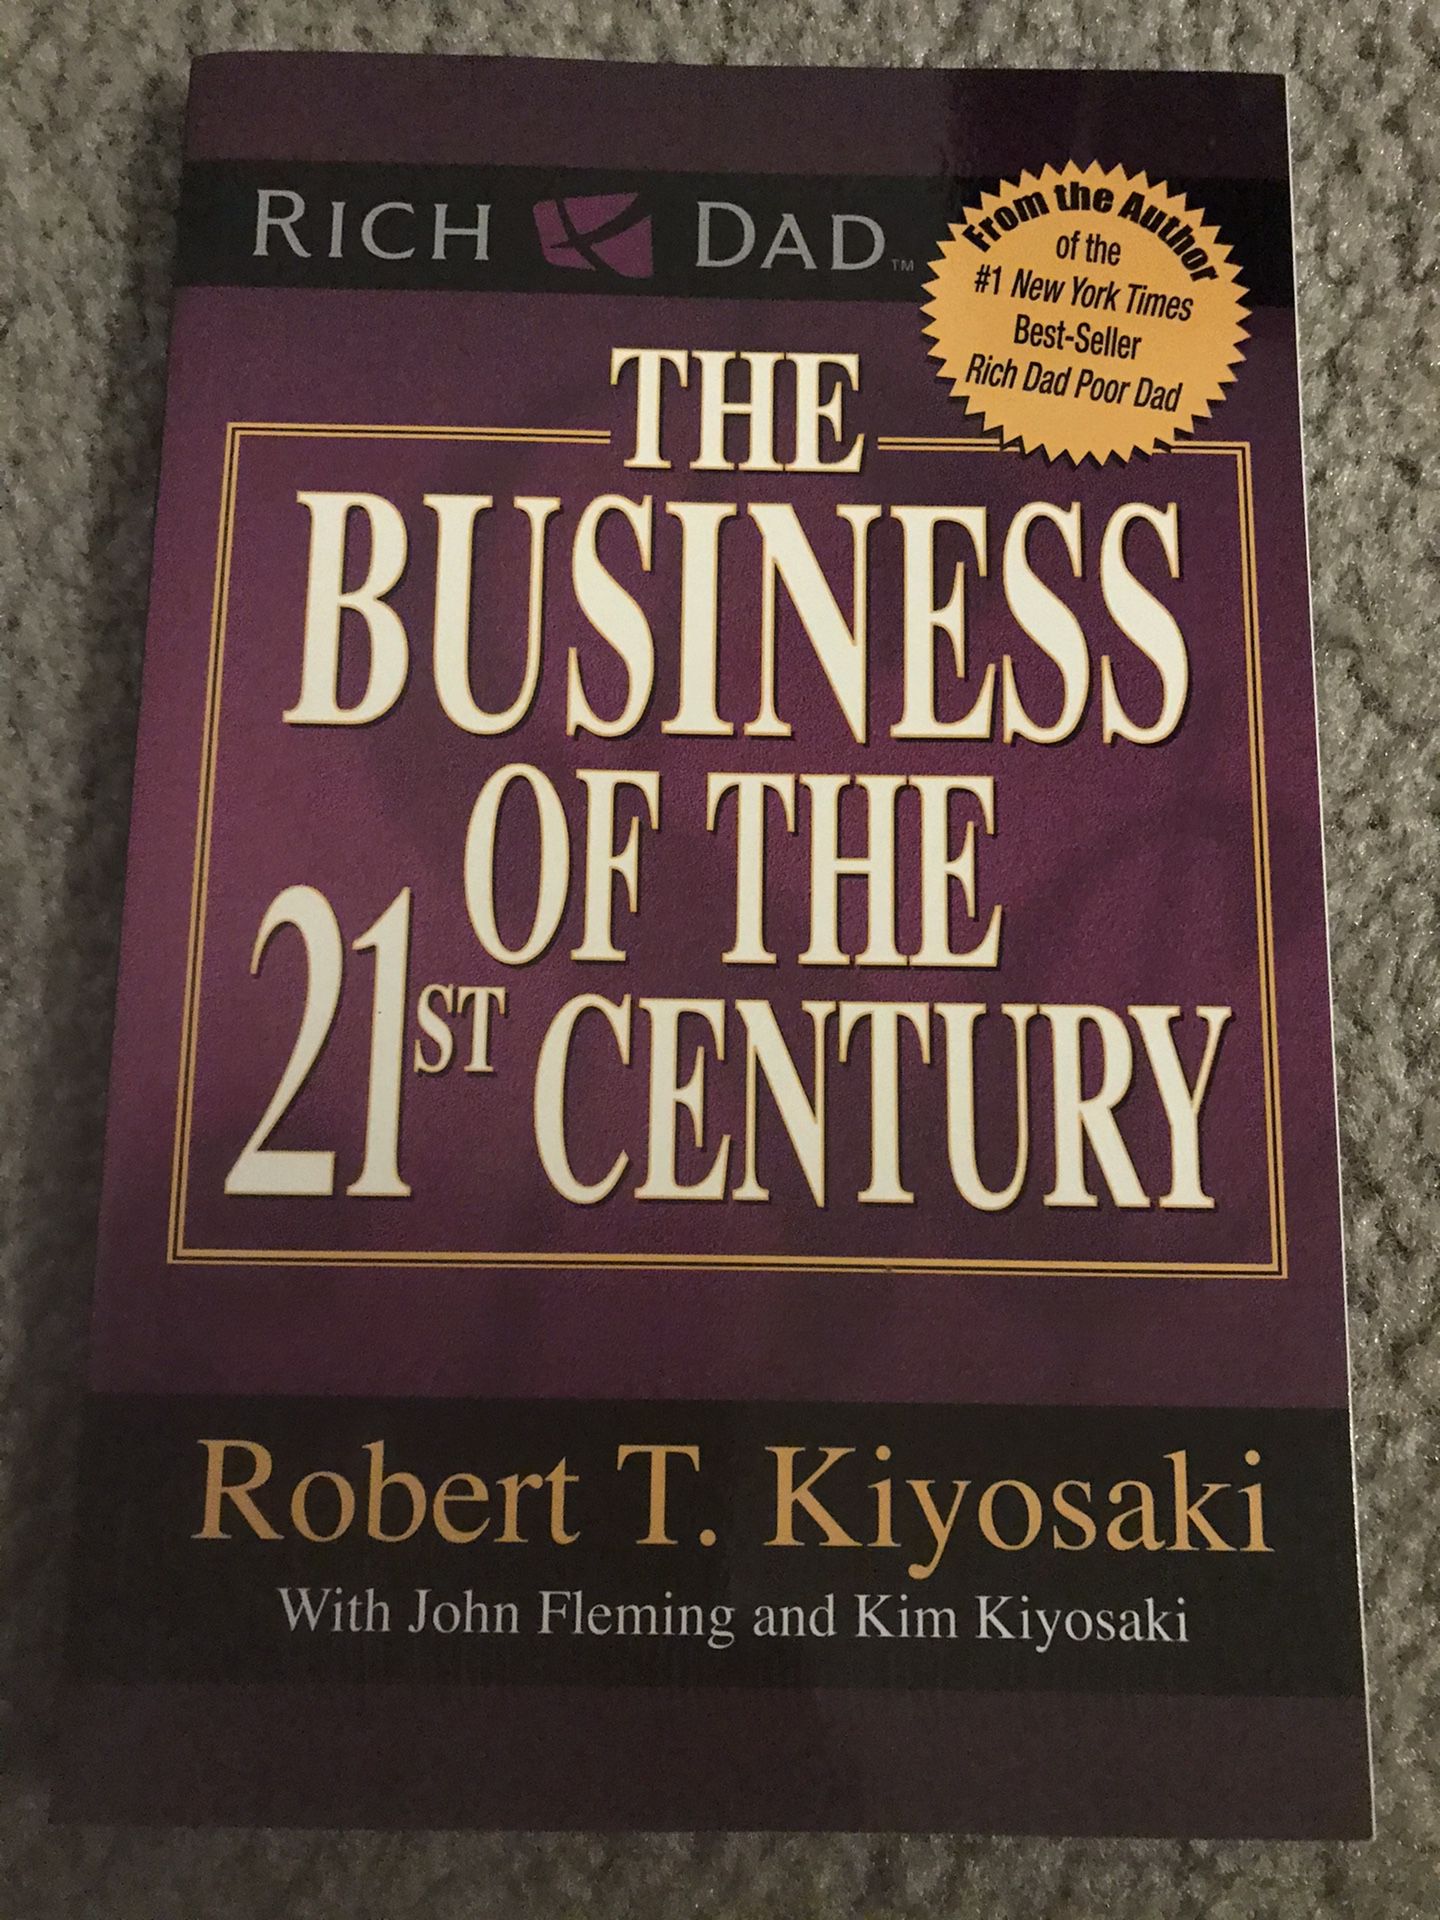 The Business of the 21st Century - Robert Kiyosaki & The Global Economic Reset - Fabian Calvo